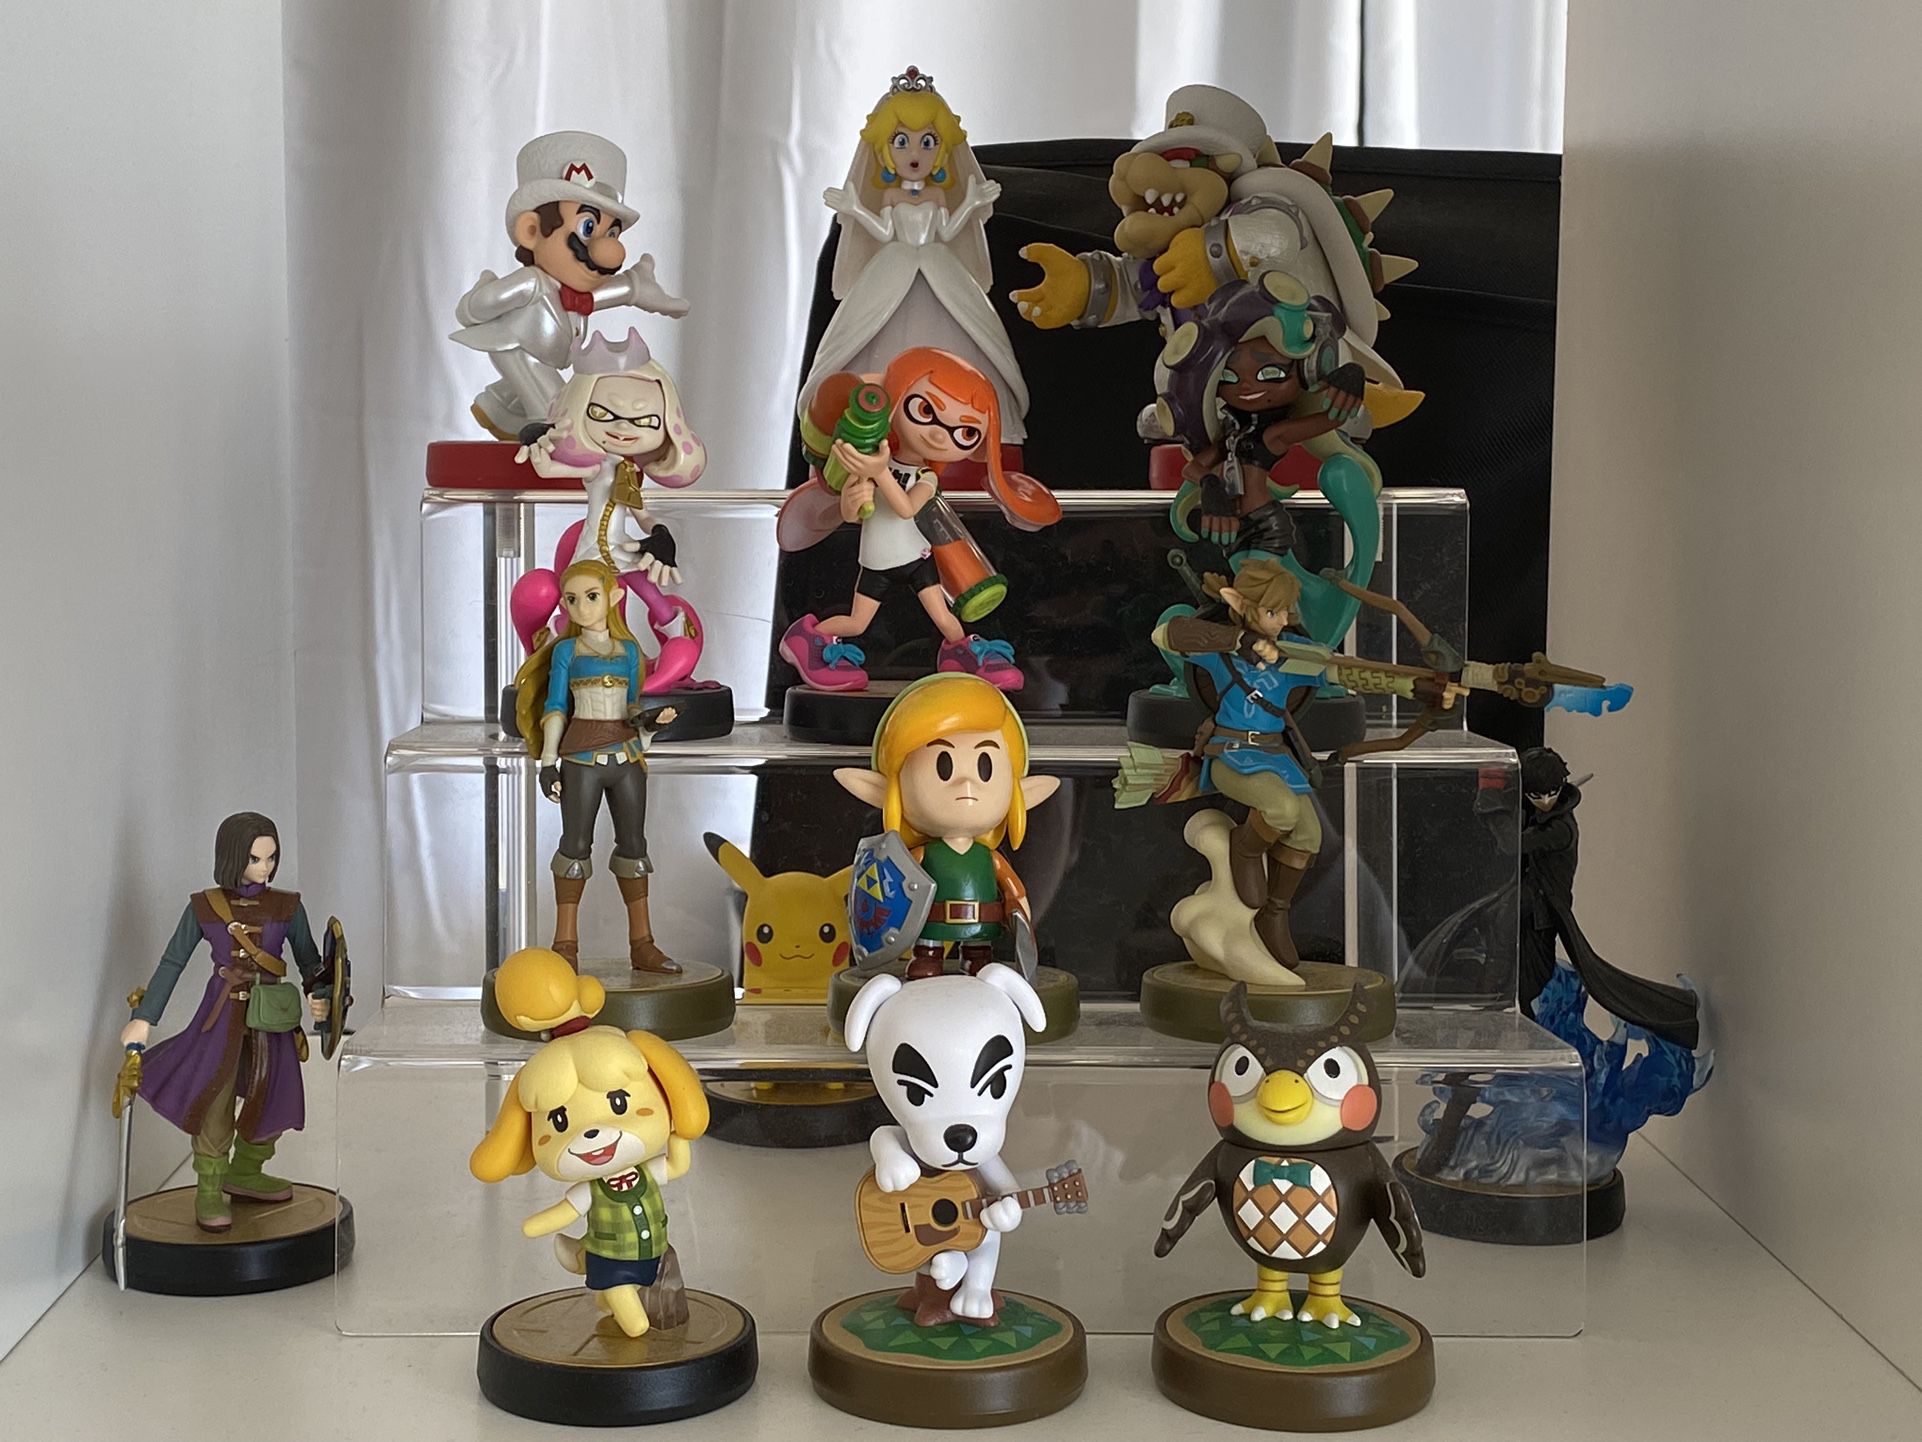 Collectible Amiibo Figures Set | Most Iconic Nintendo Switch Games | Great Gift Set